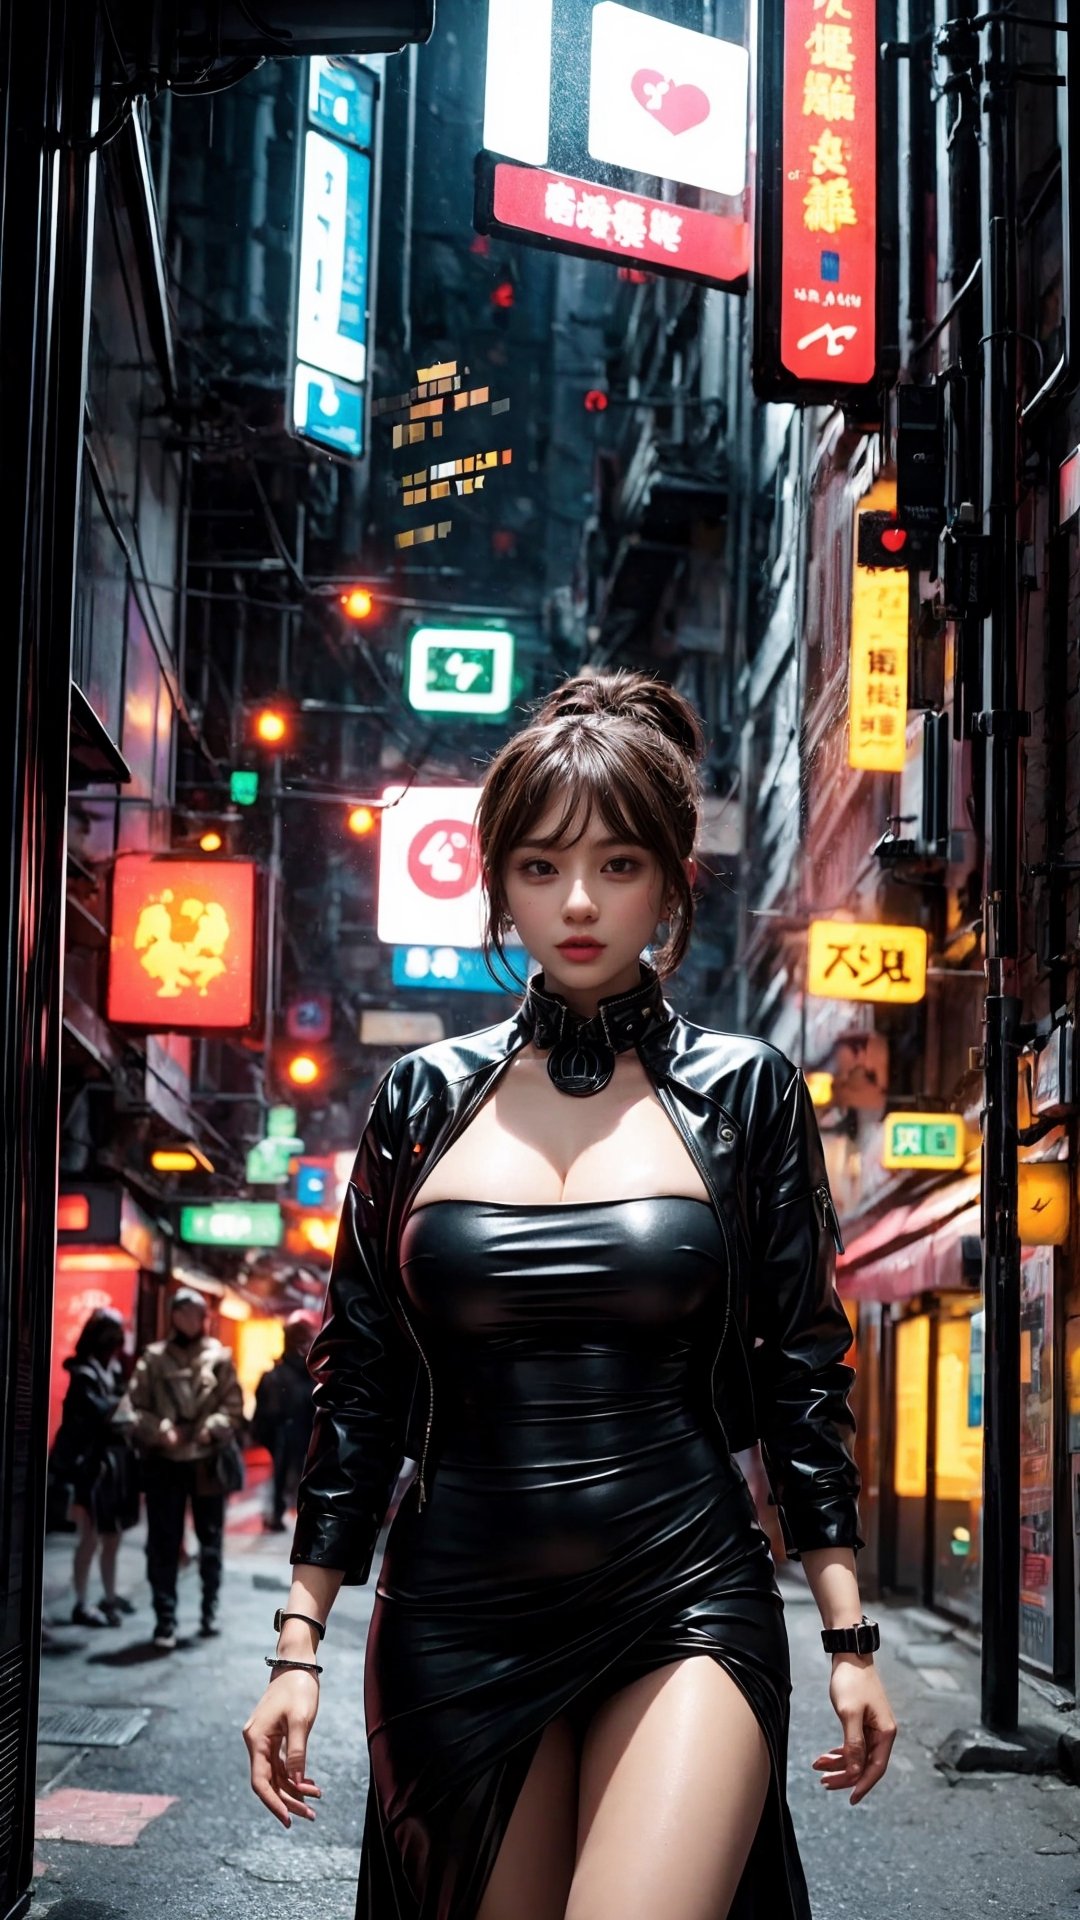 (Glitching:1.5), (glitch:1.5), 1girl, (huge breasts:1.3), black dress, jacket, (wavy white ponytail hair:1.2), BREAK outdoors, incyberpunk city, glowing neon,Cyberpunk,Cyberpunk, neon lights, science fiction,Mecha,Japanese girl